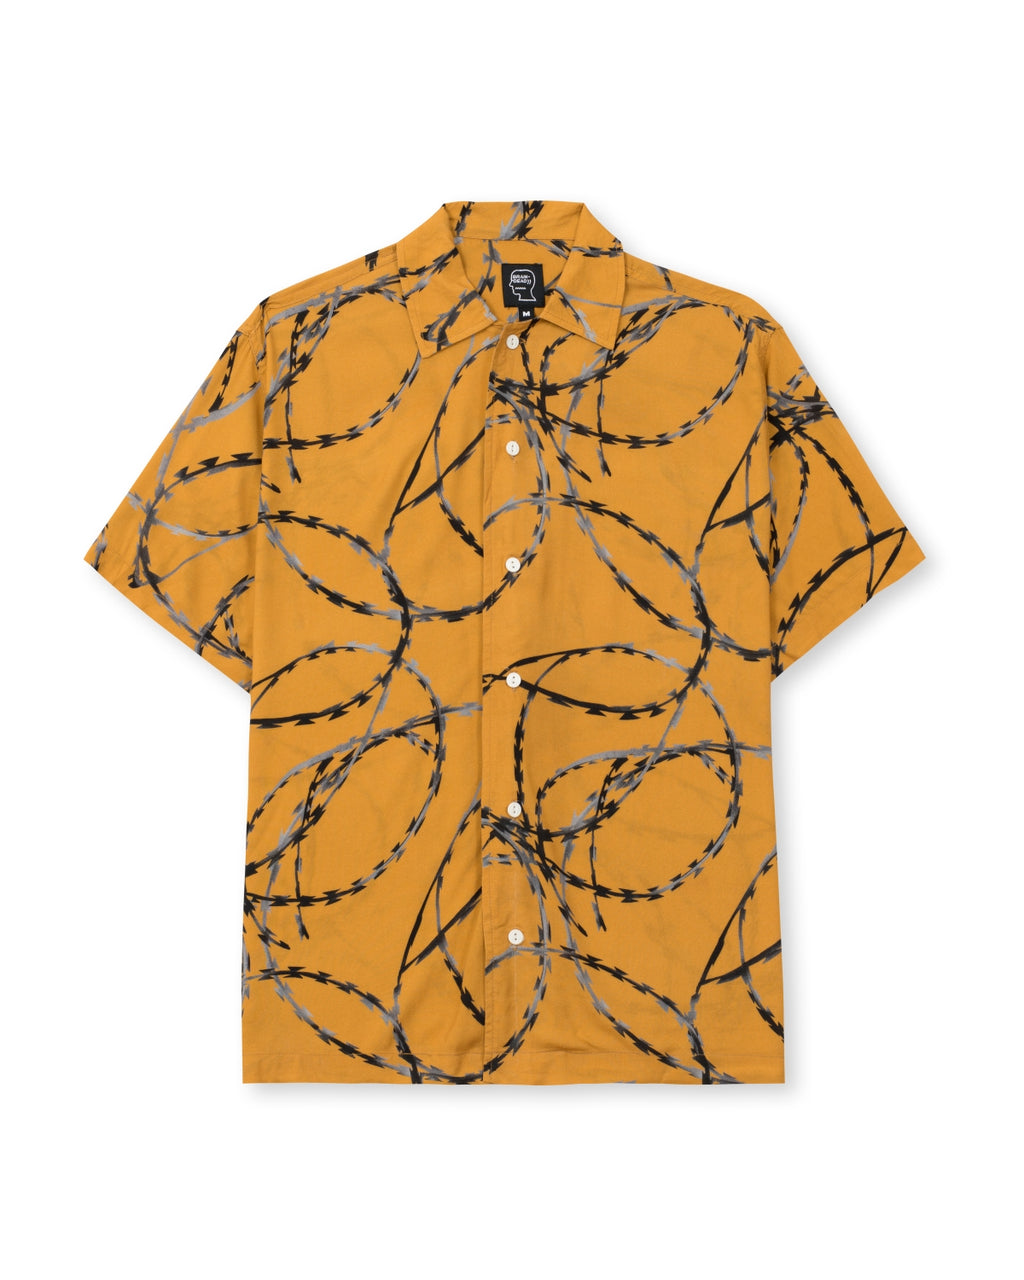 Razorwire Rayon Shirt - Orange